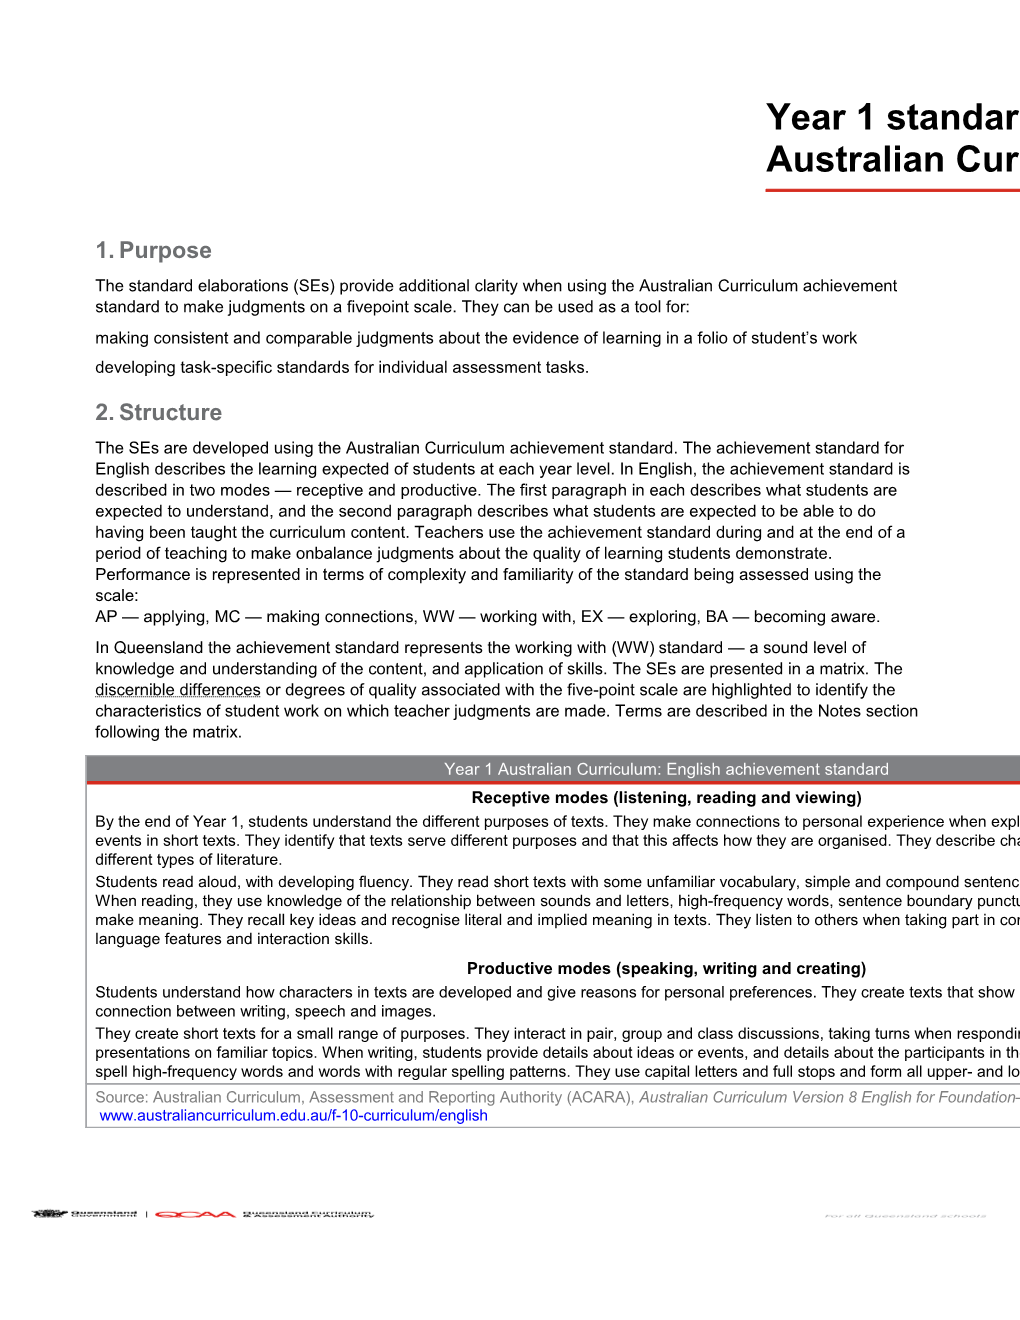 Year 1 Standard Elaborations Australian Curriculum: English